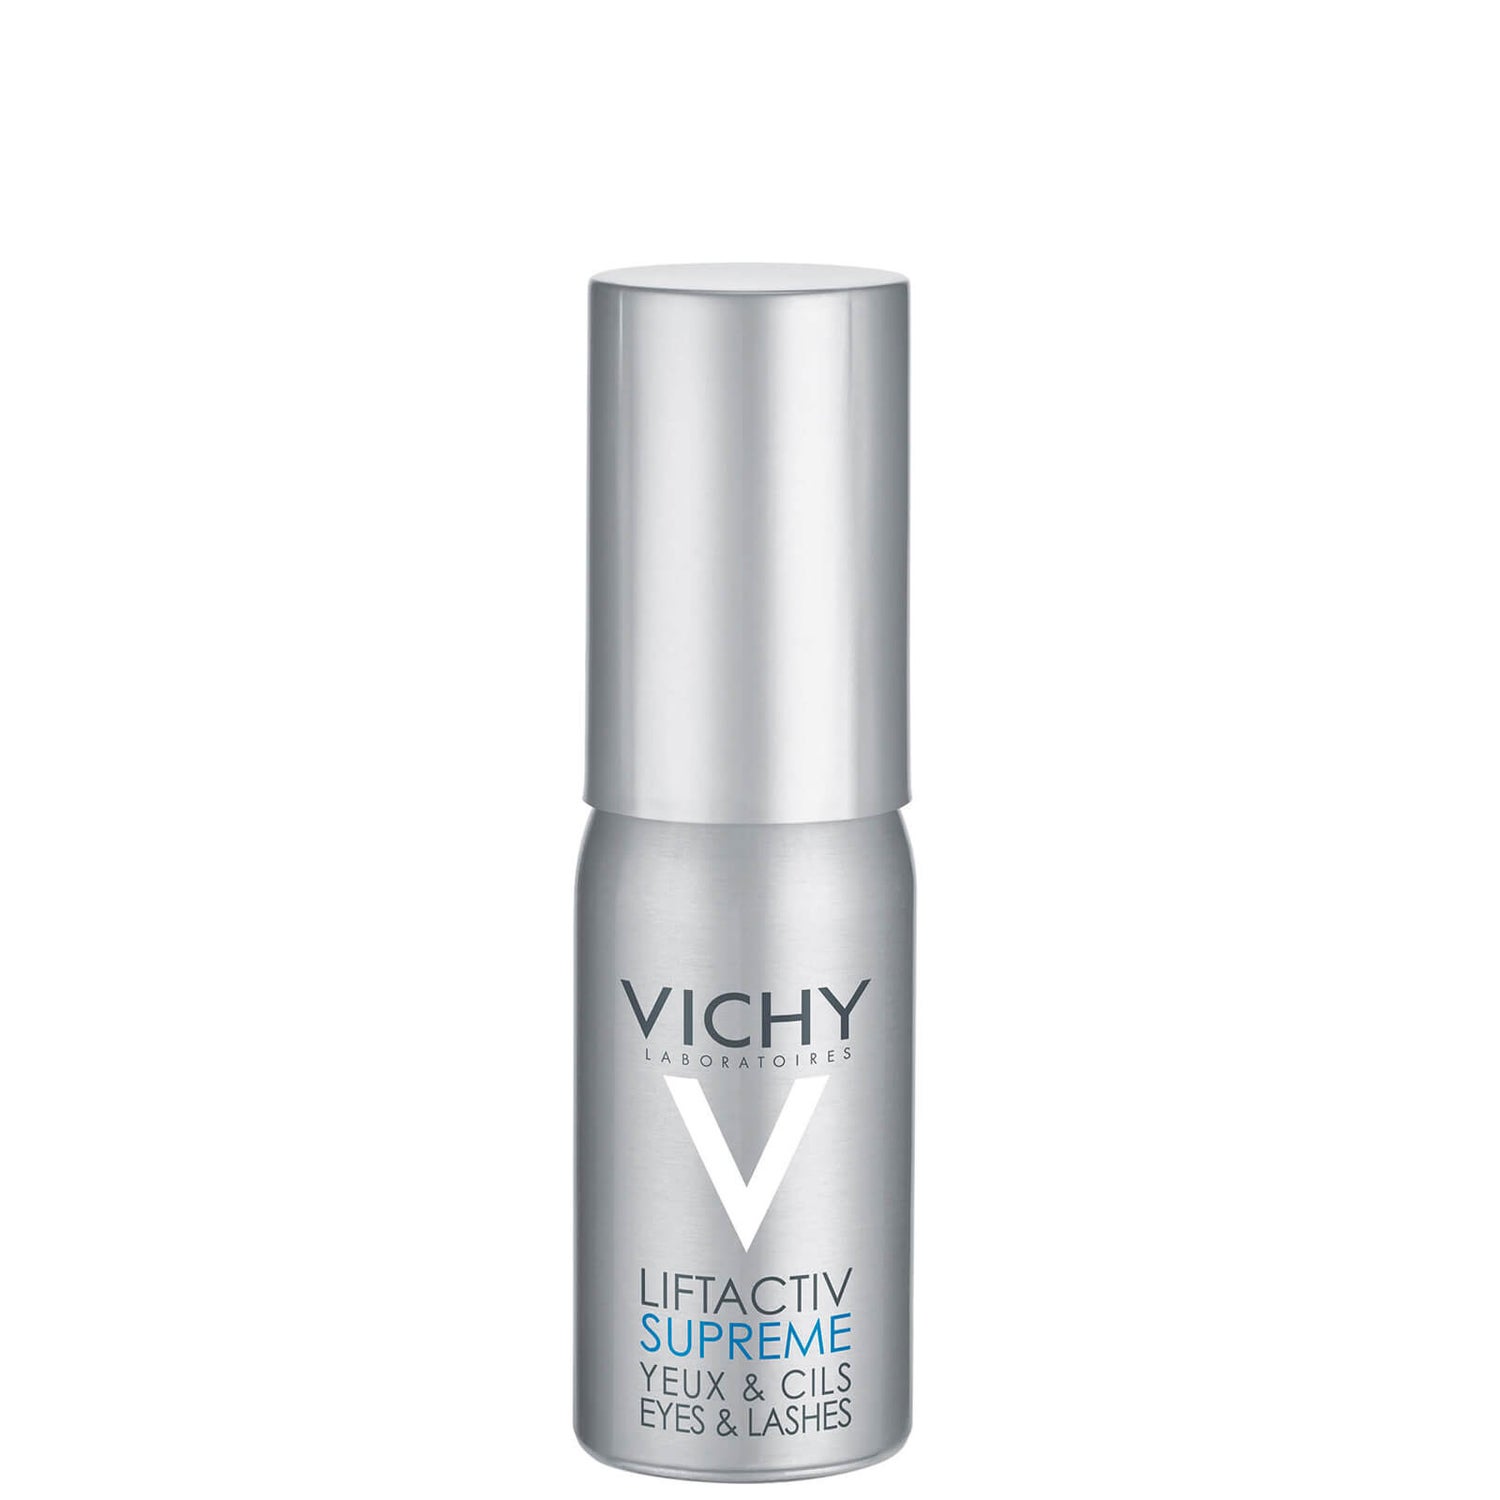 Vichy LiftActiv Serum 10 Eyes & Lashes -seerumi 15ml